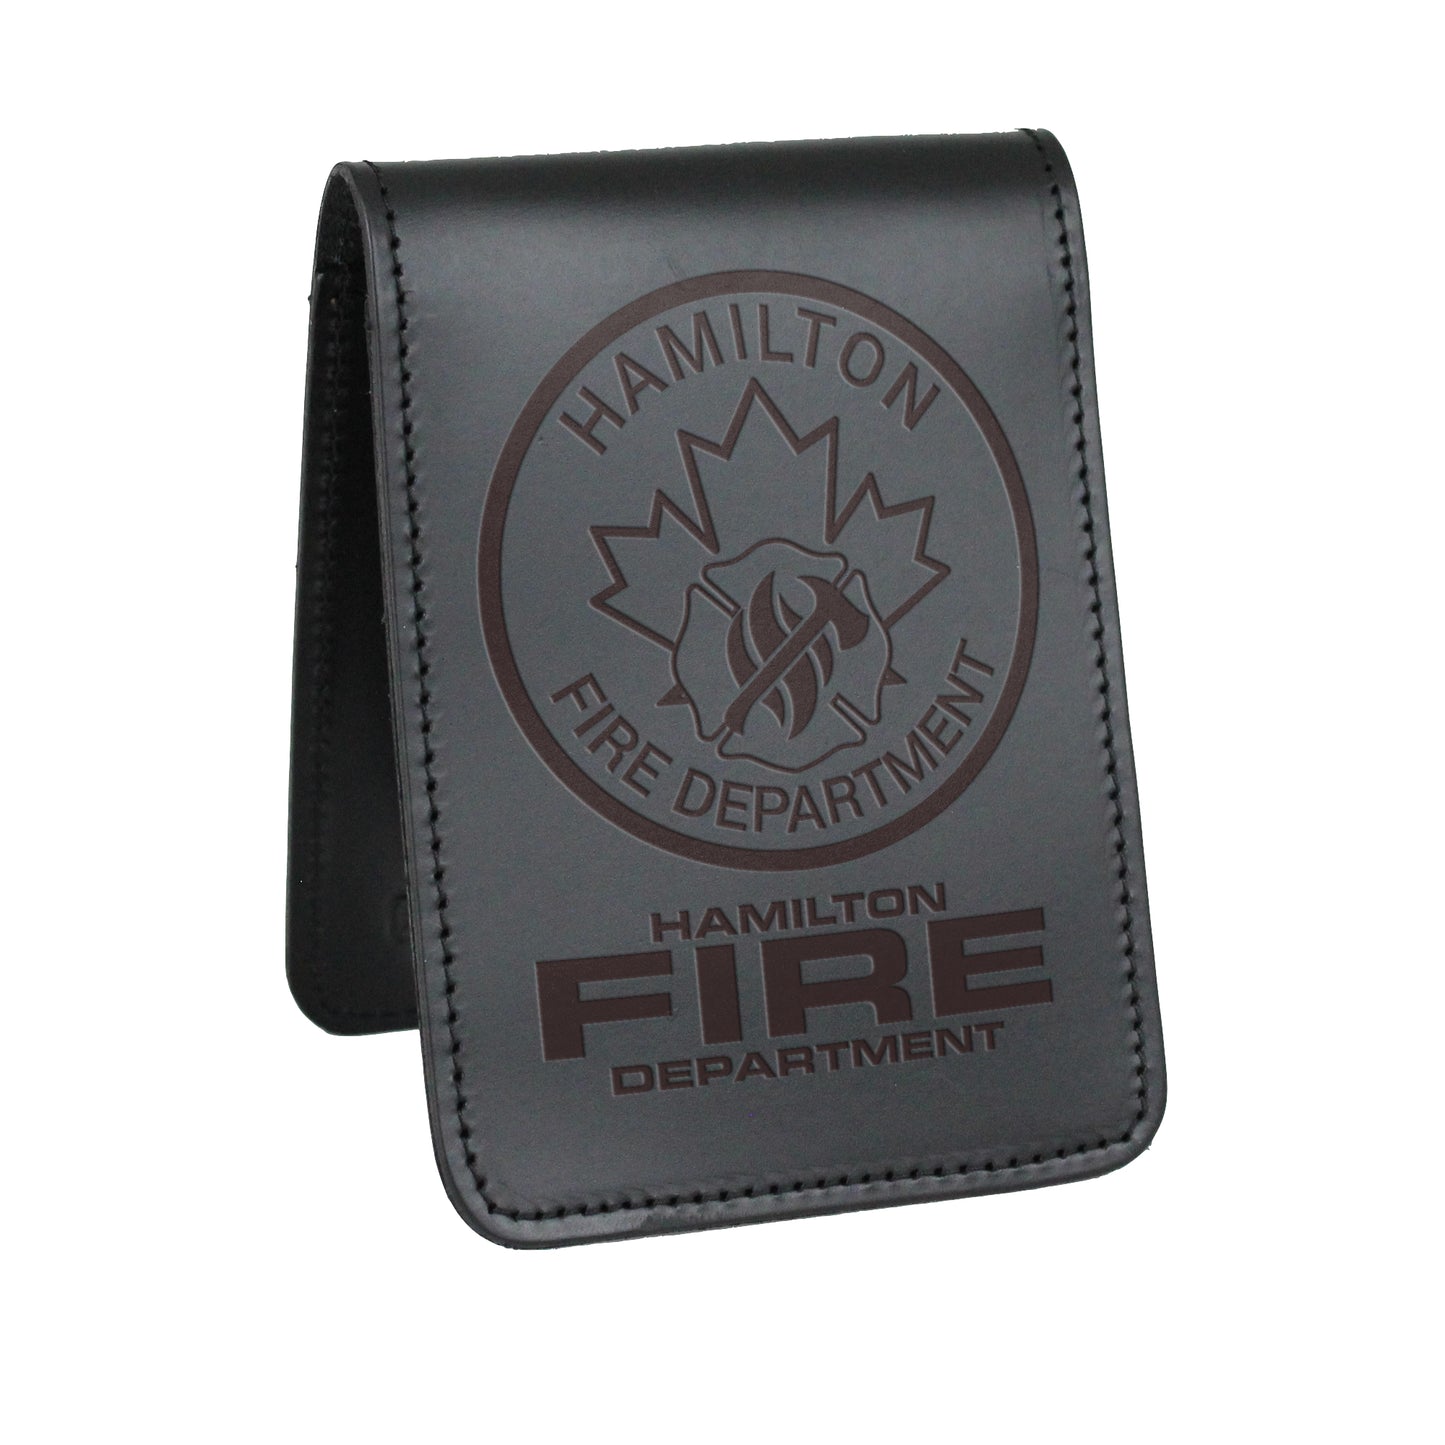 Hamilton Fire Department Notebook Cover